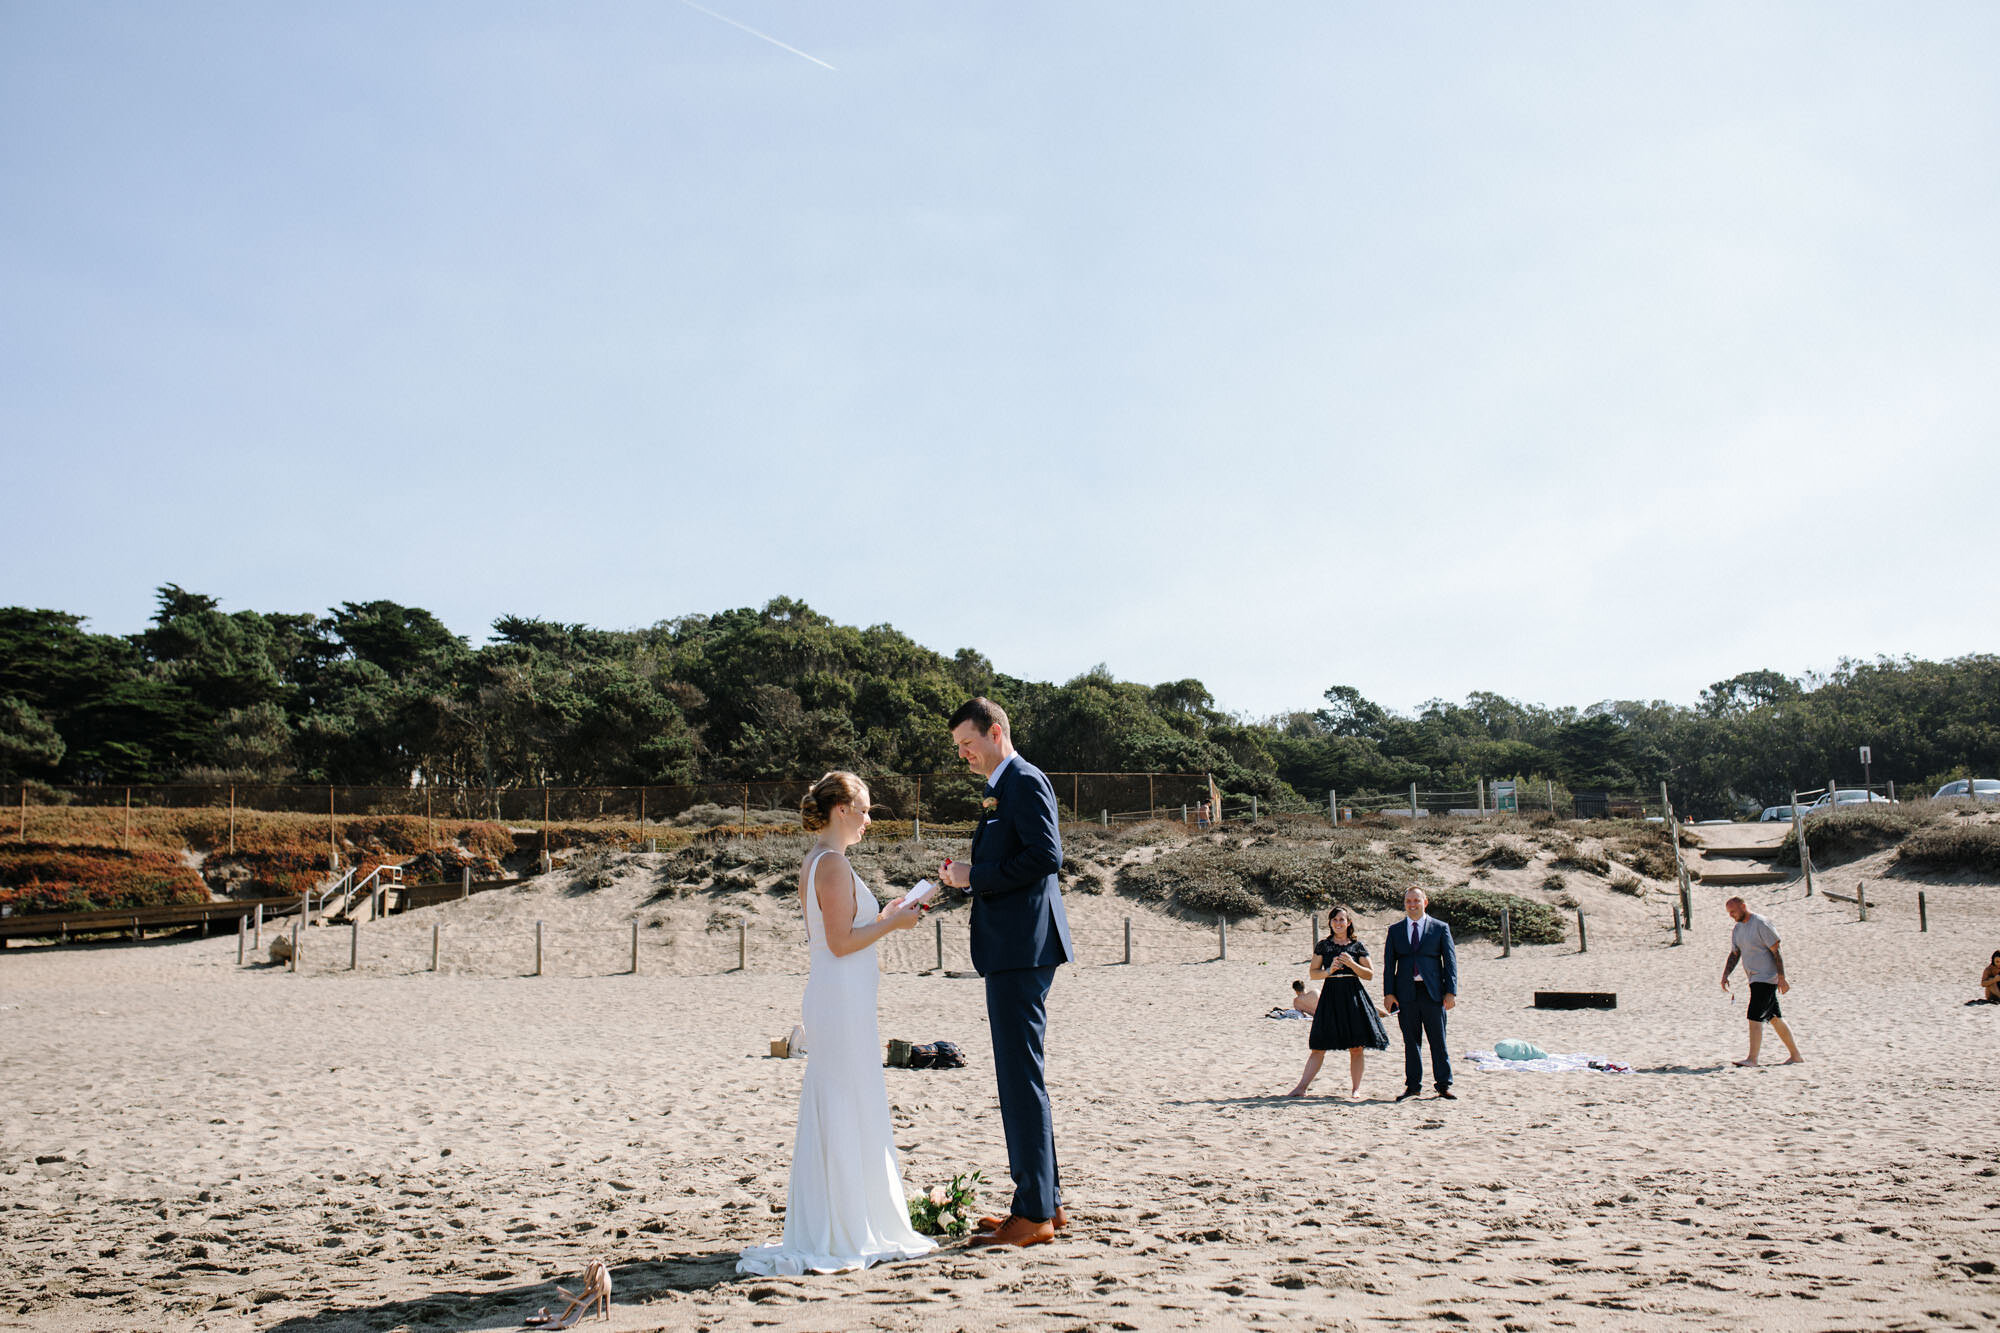 melissa-habegger-baker-beach-wedding-vows-011.jpg